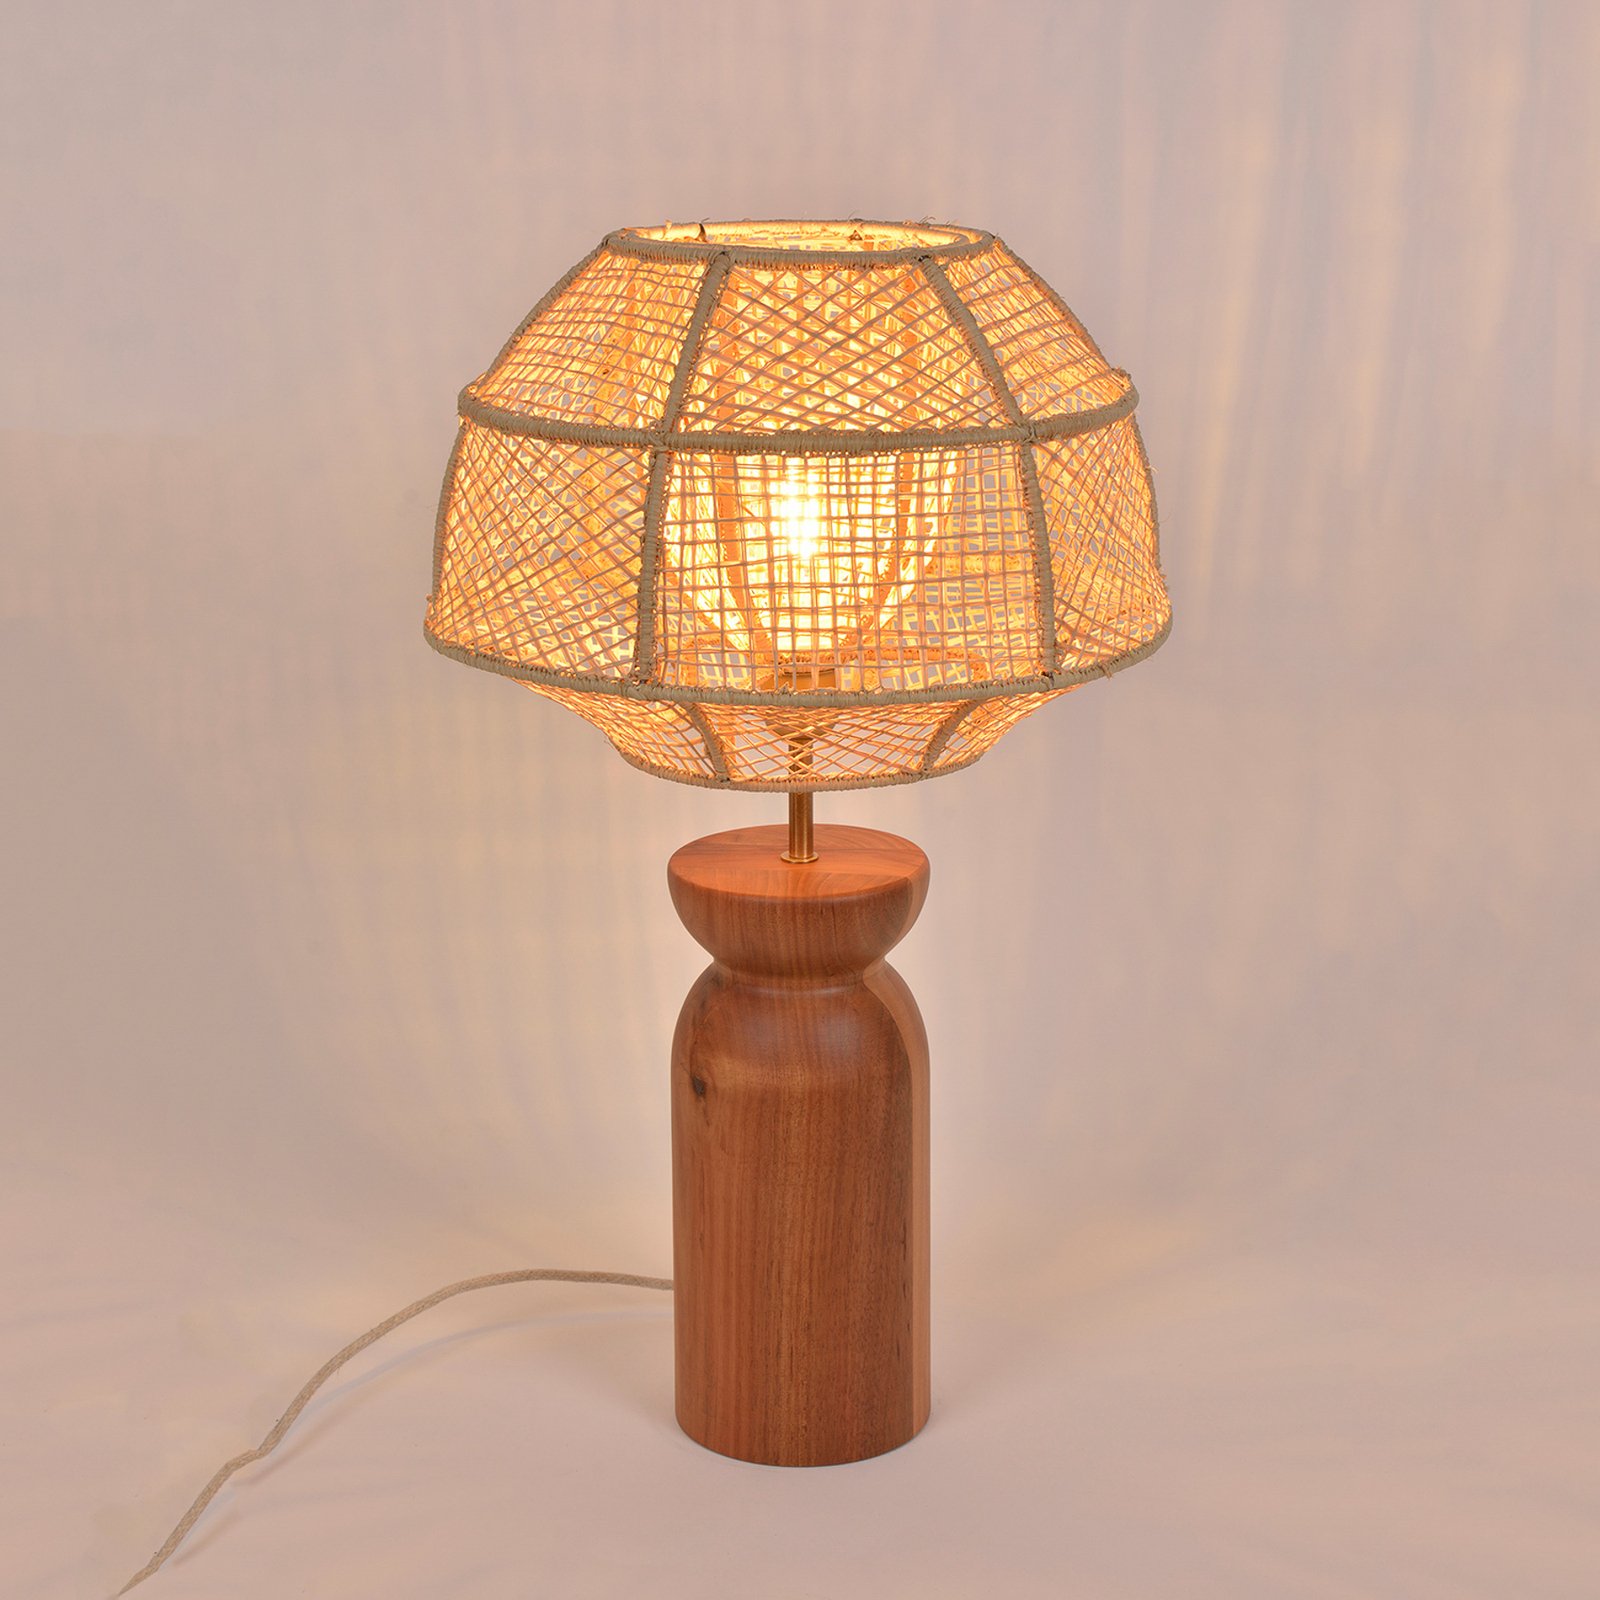 MARKET SET Odyssée table lamp, height 63cm